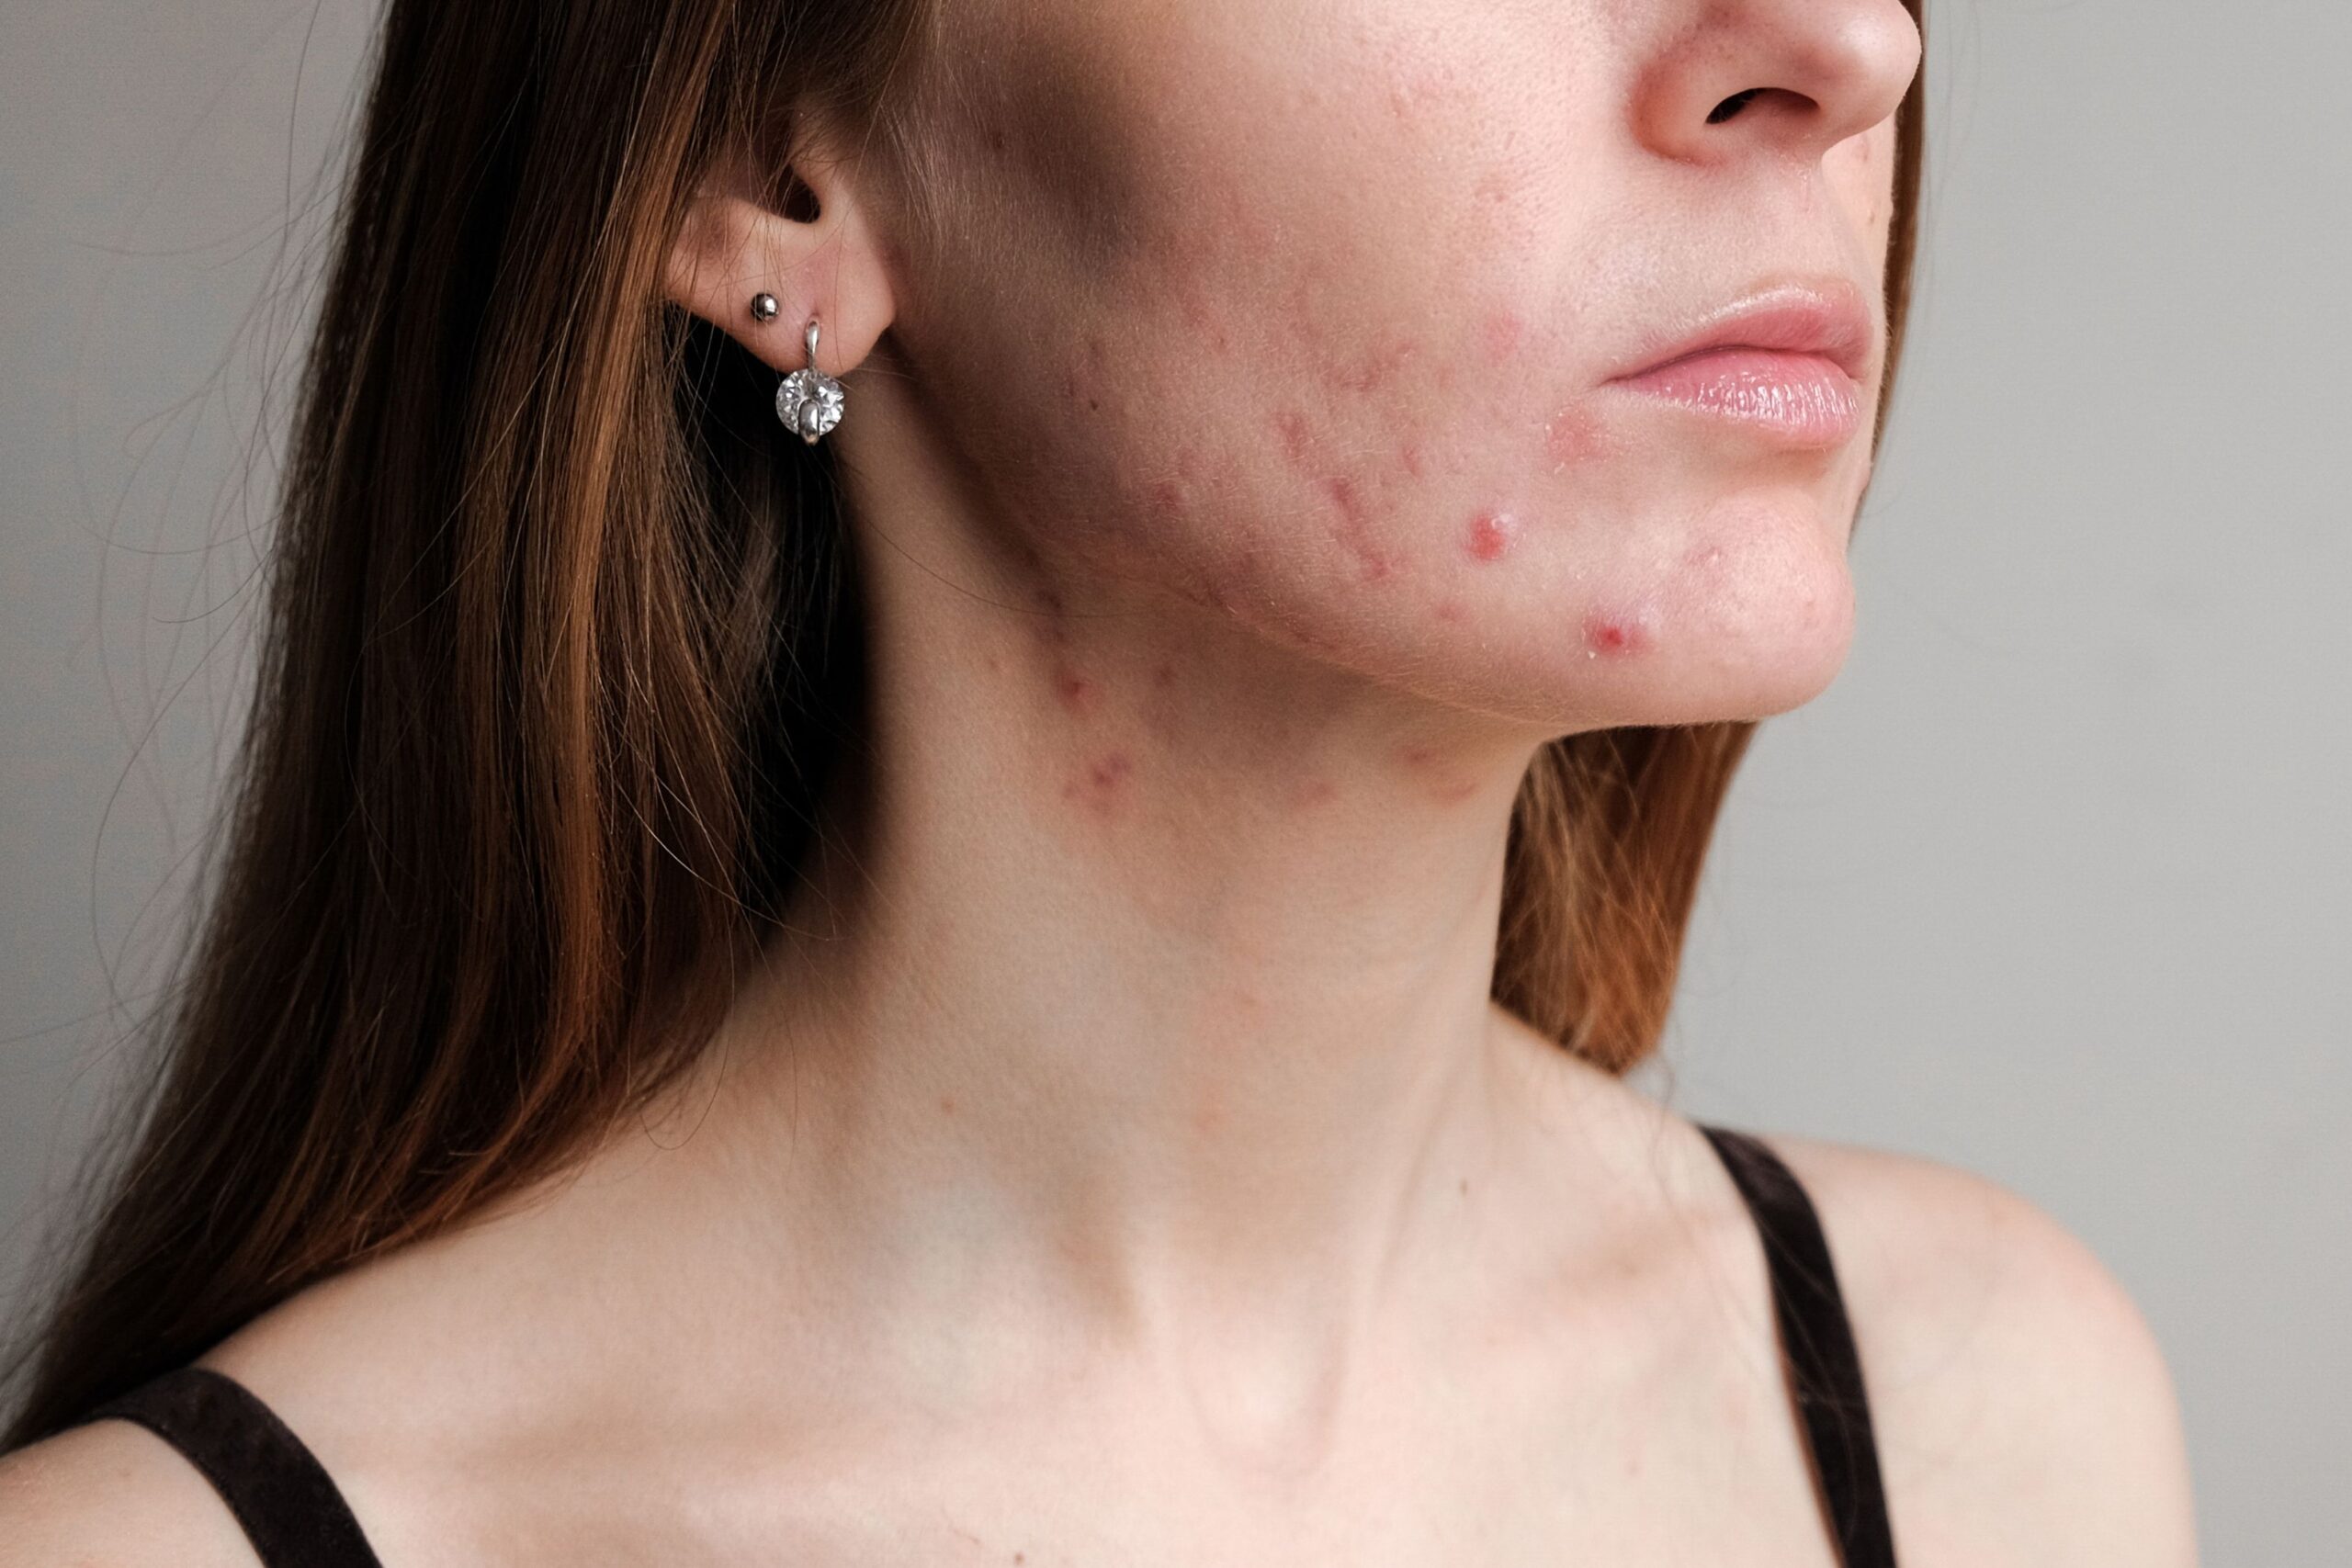 Dermatology Consultation: Treatment of Acne